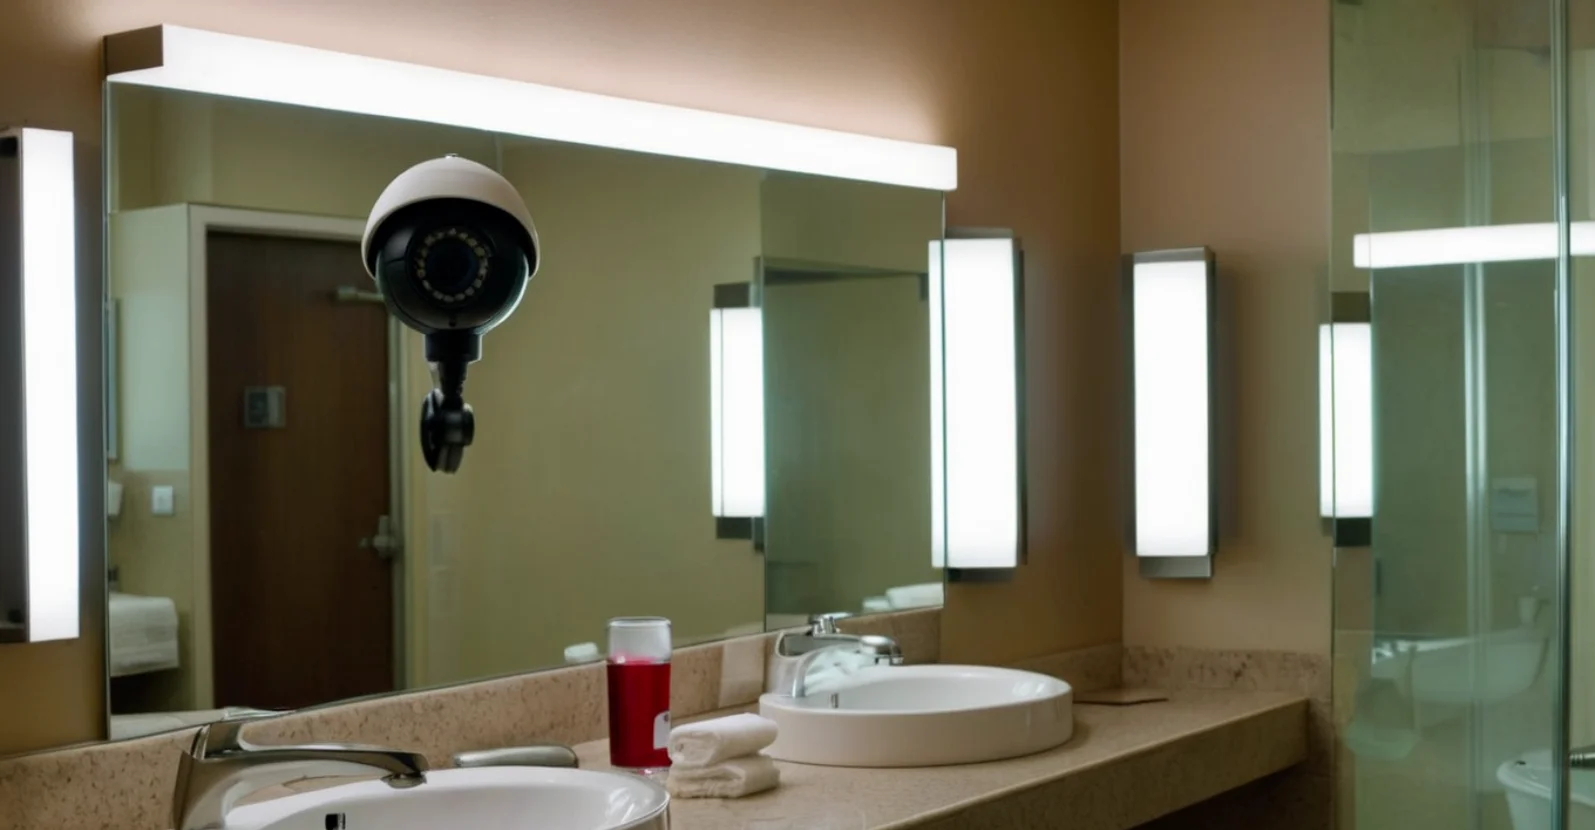 Hotel Bathroom Surveillance